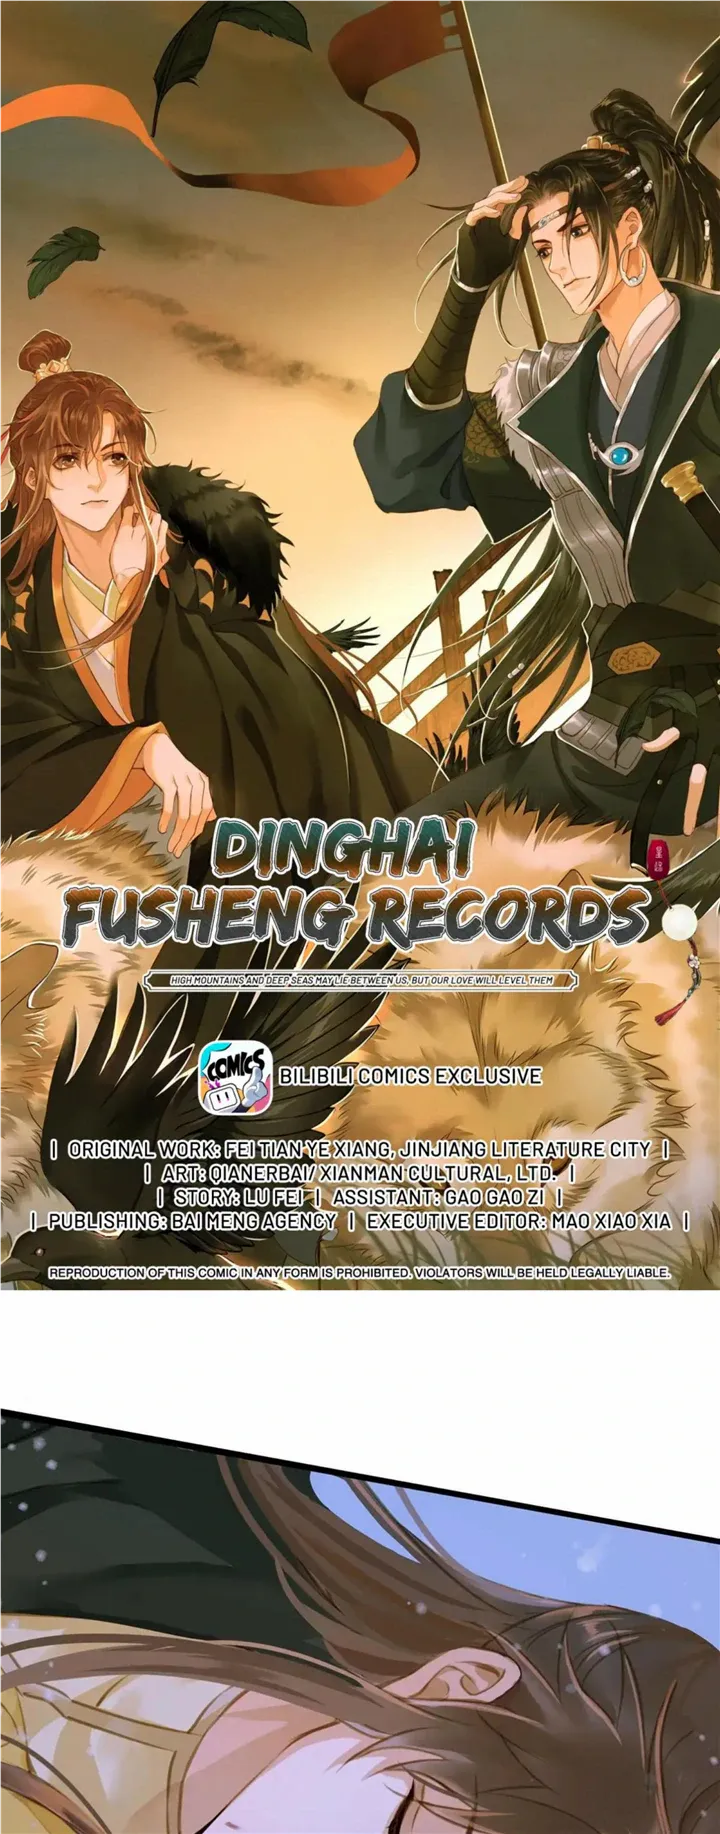 Dinghai Fusheng Records - Page 2